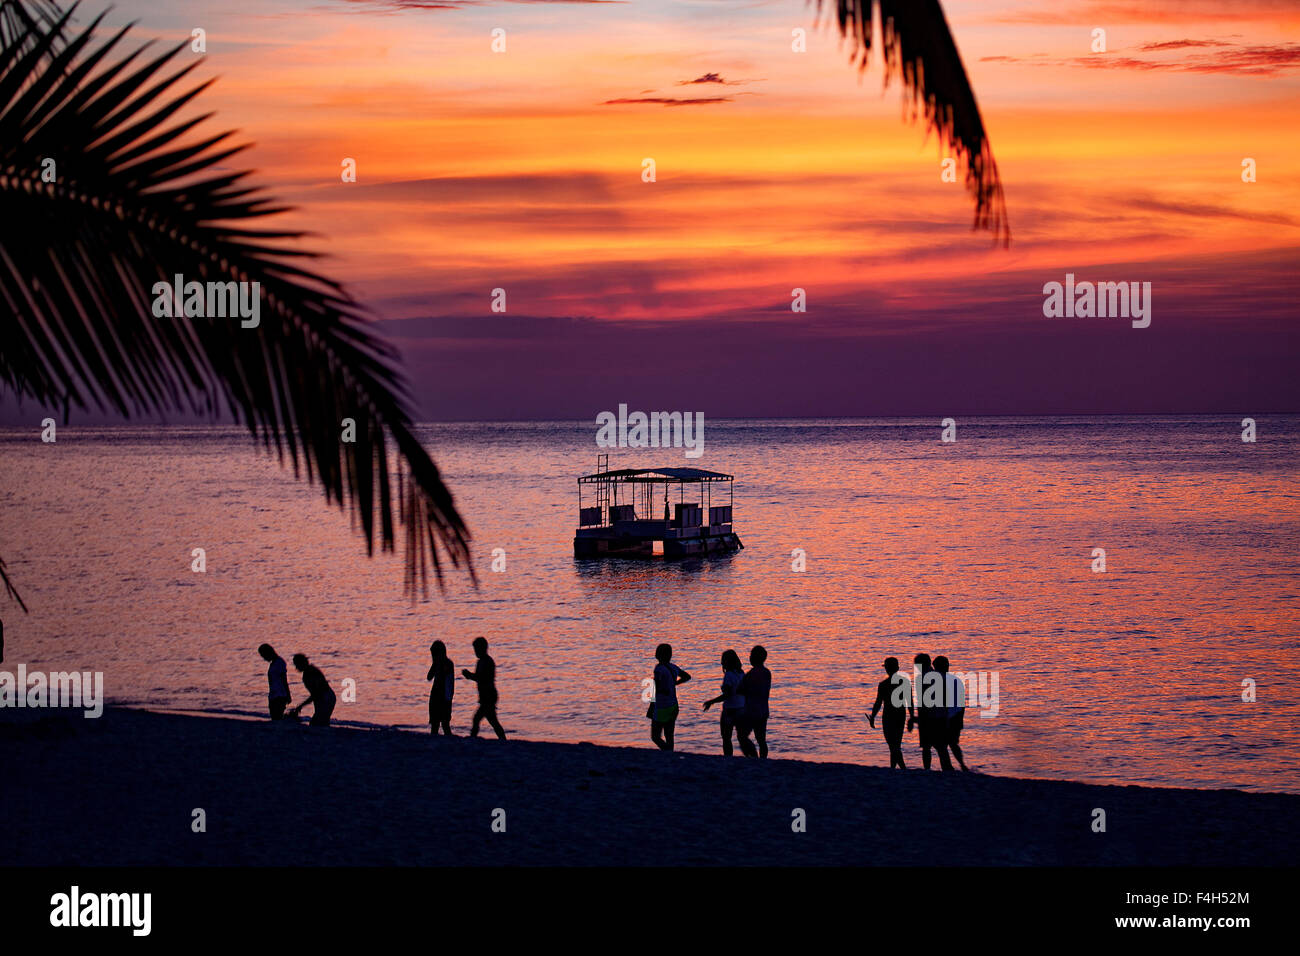 People walk on a beach at sunset. Stock Photo